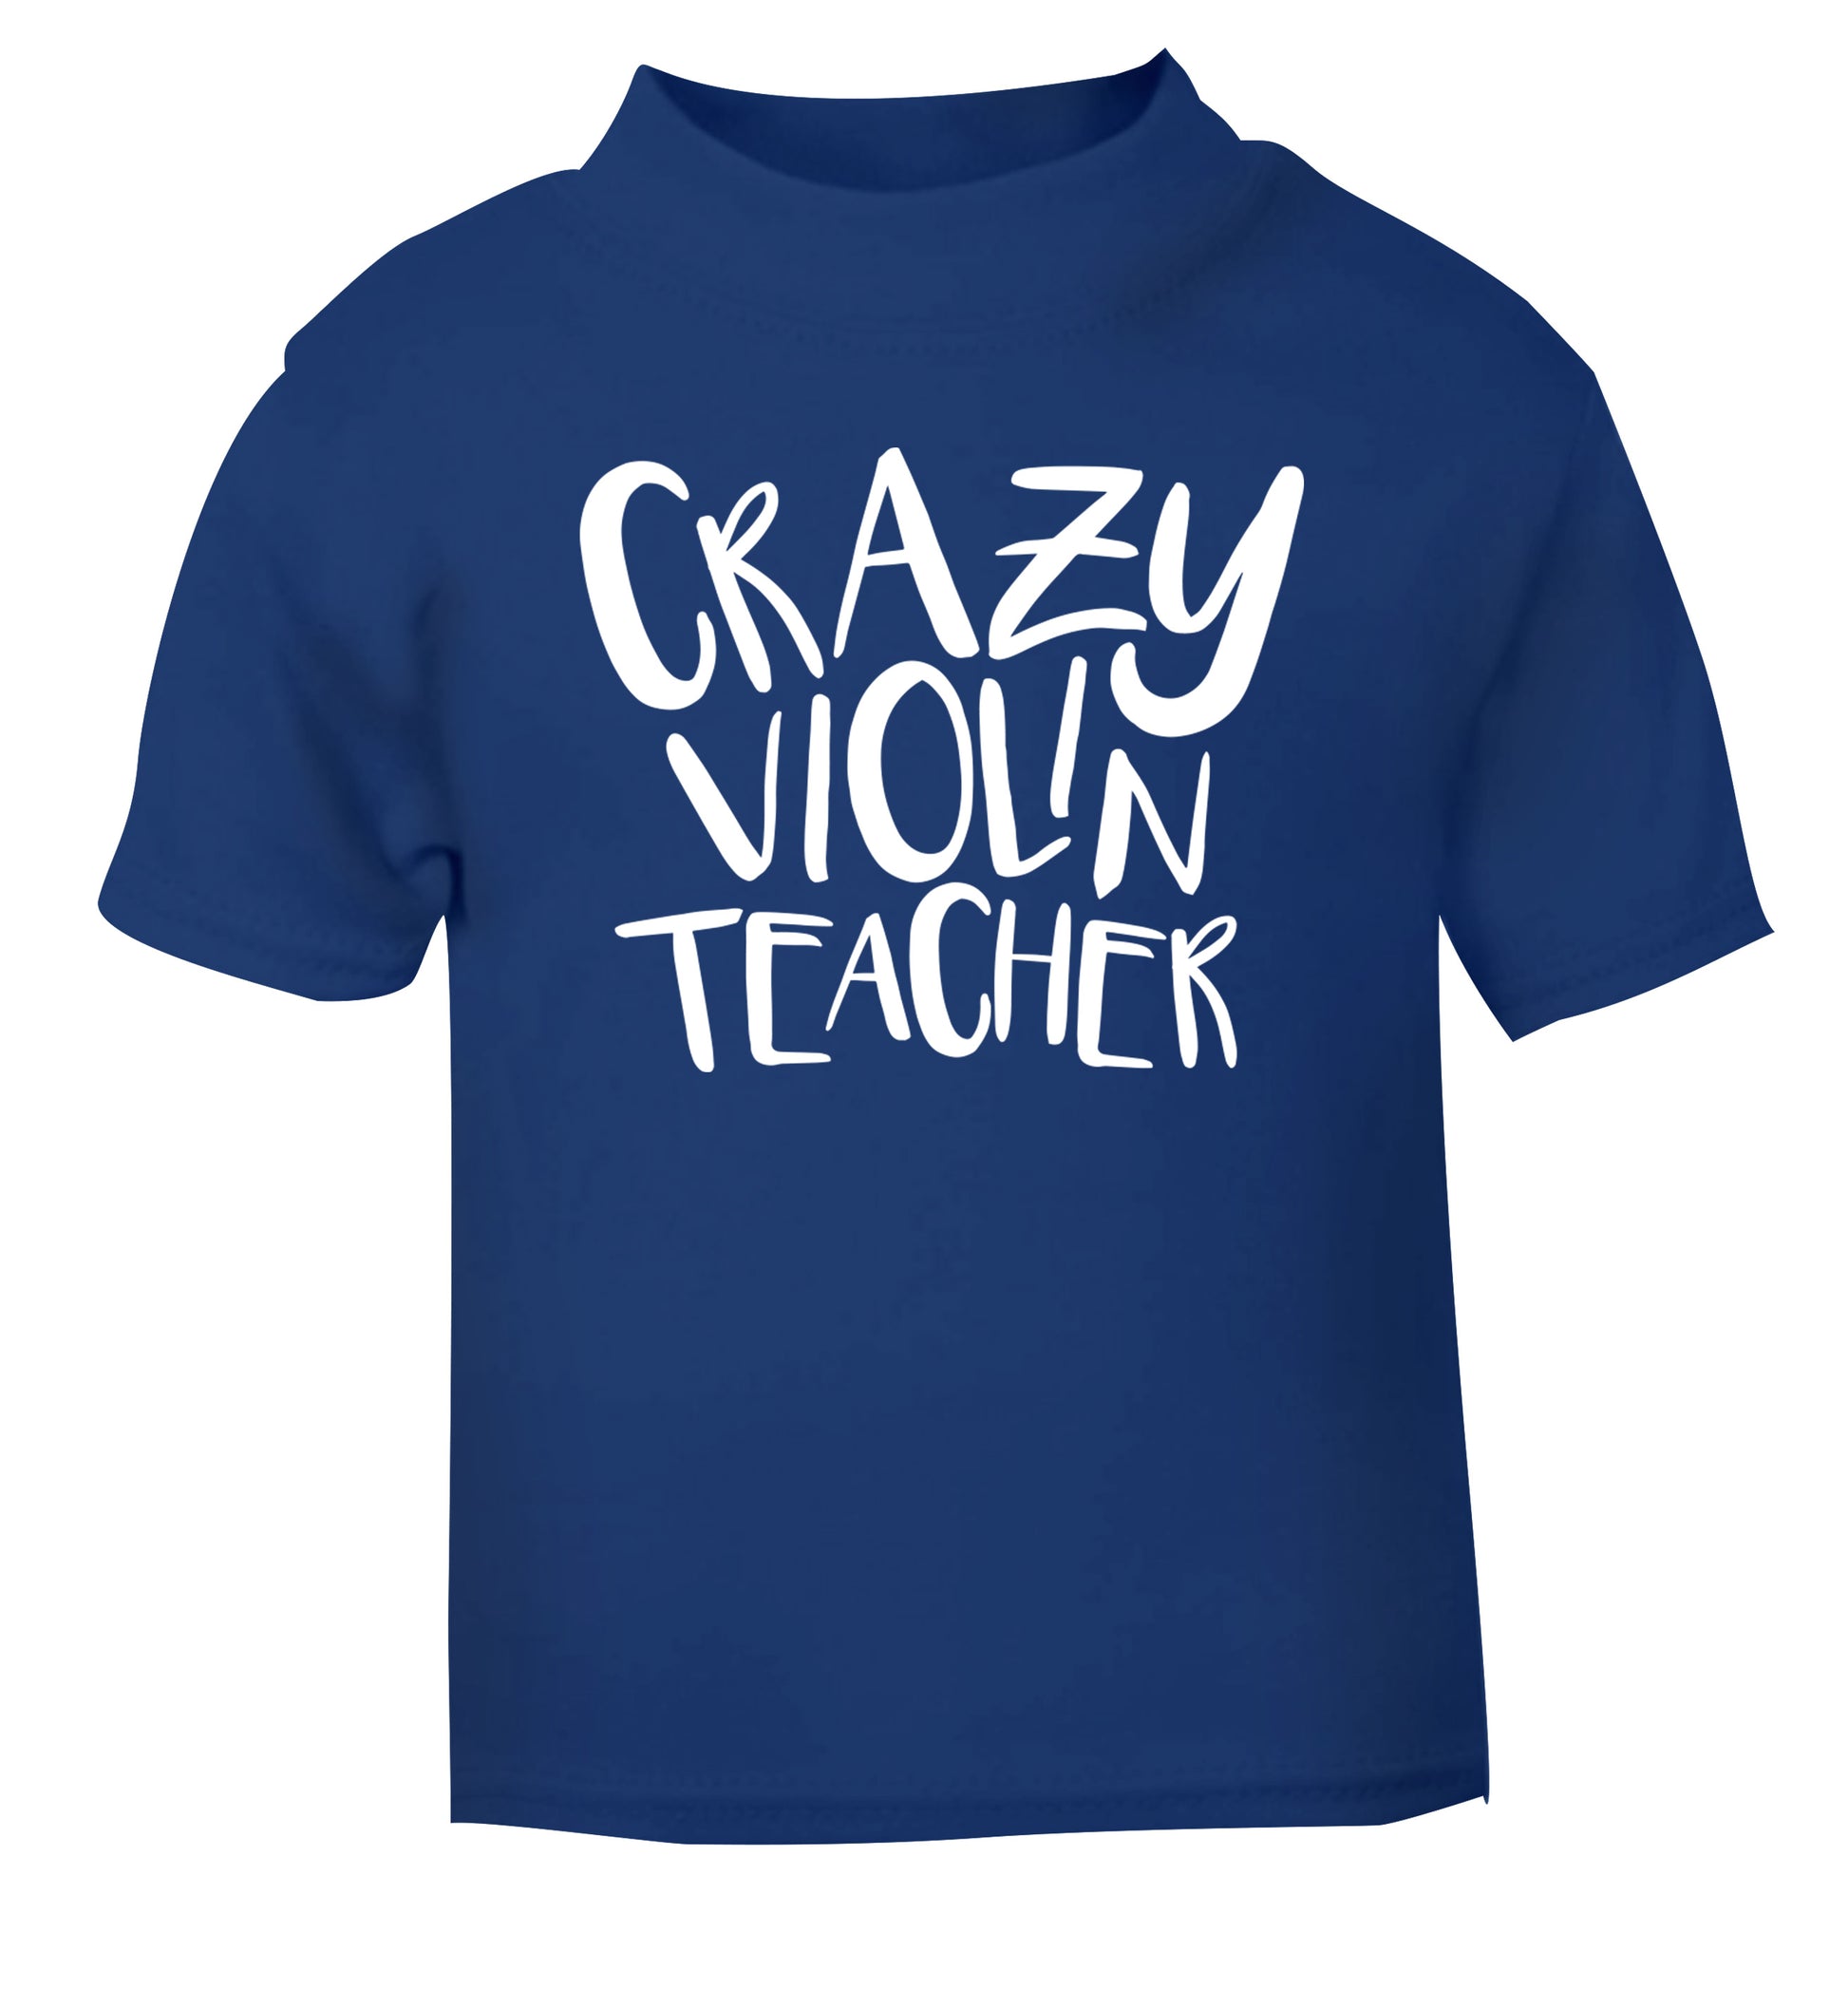 Crazy violin teacher blue Baby Toddler Tshirt 2 Years